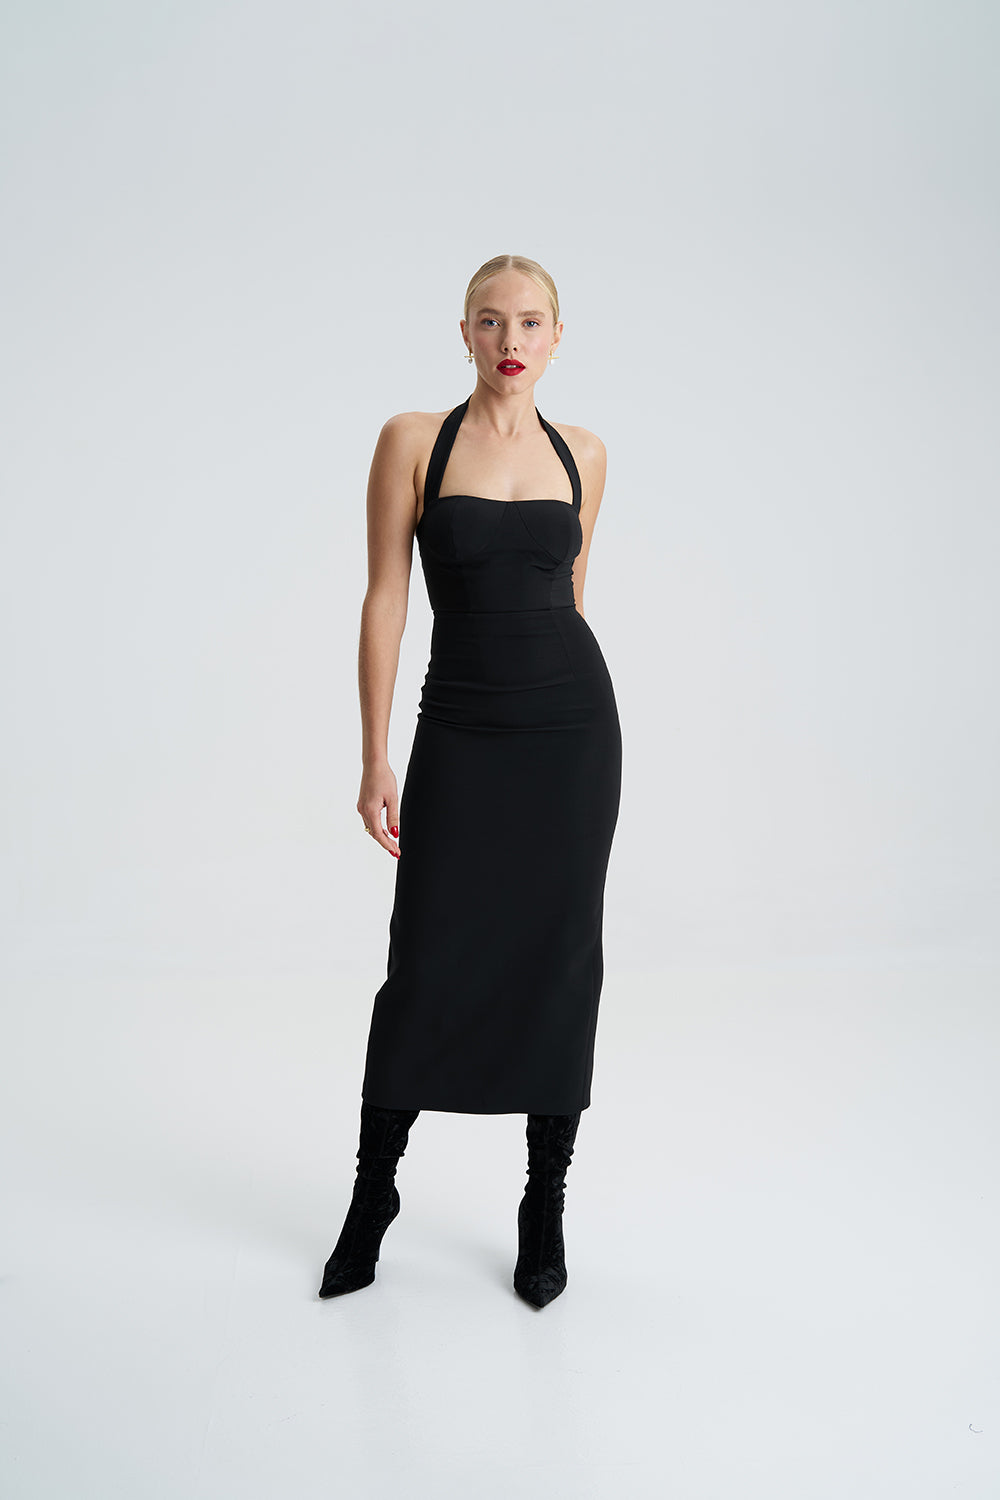 Zoa Black Dress